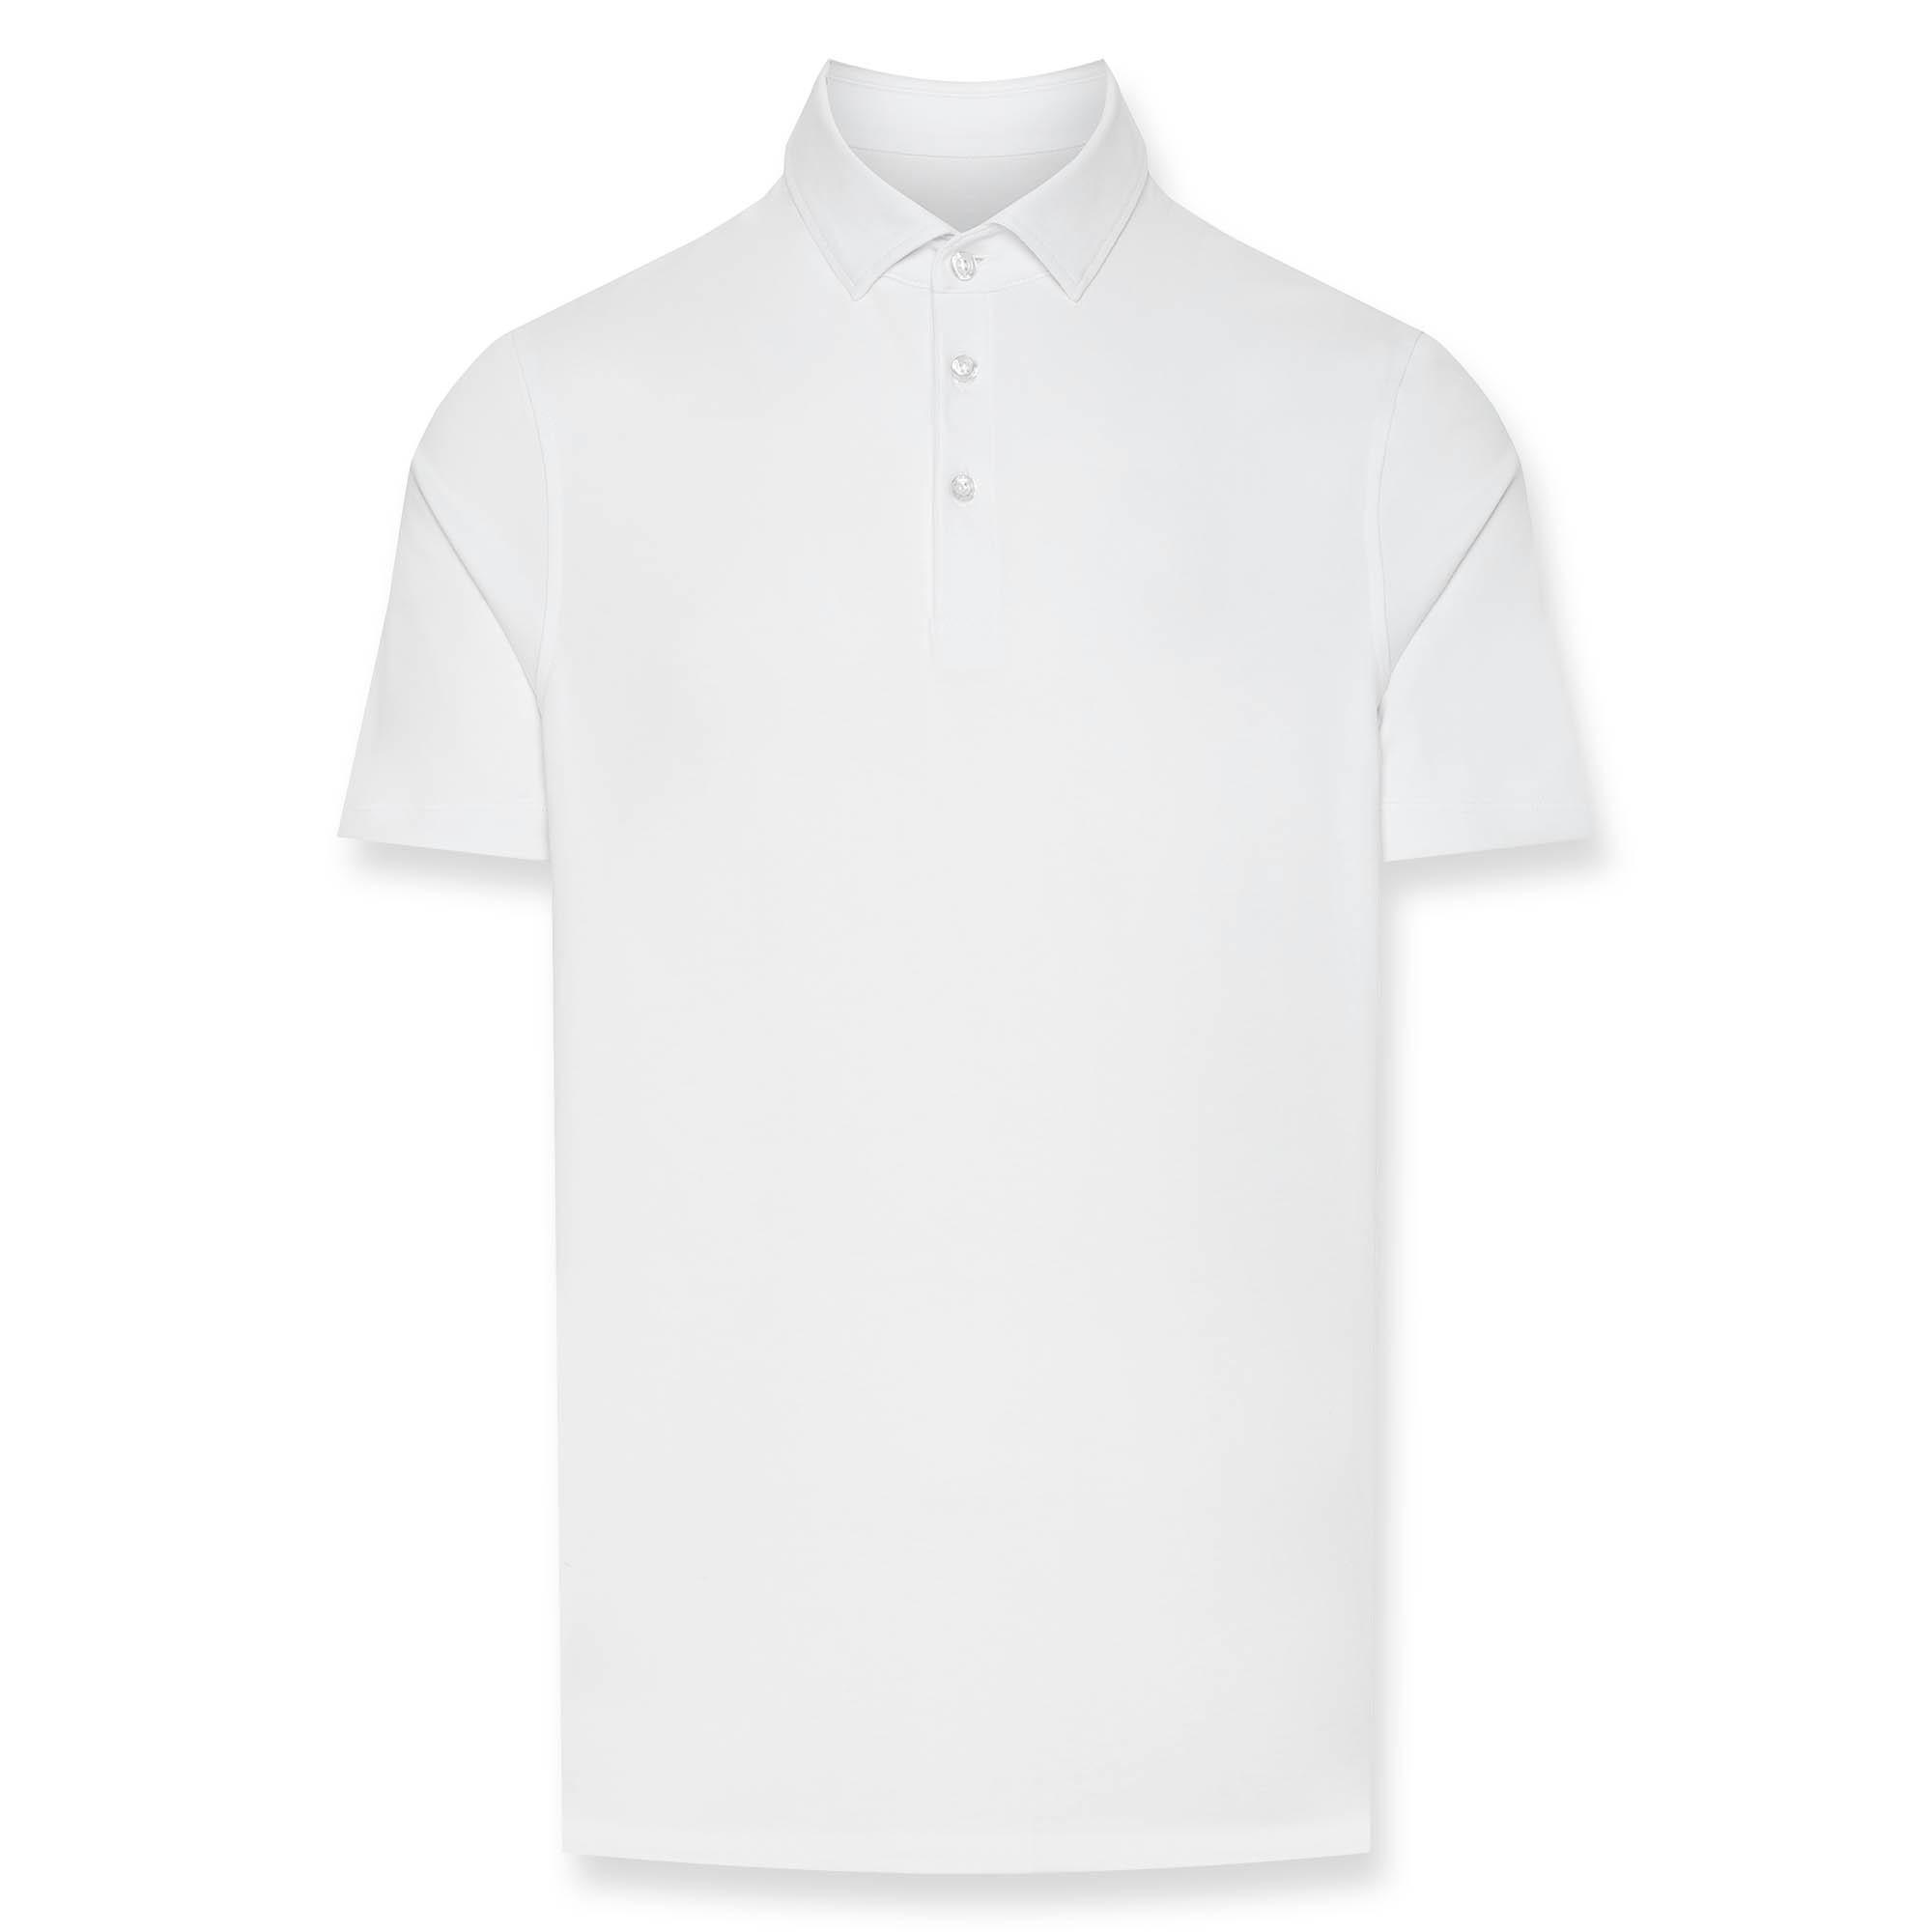 Biała koszulka Polo męska